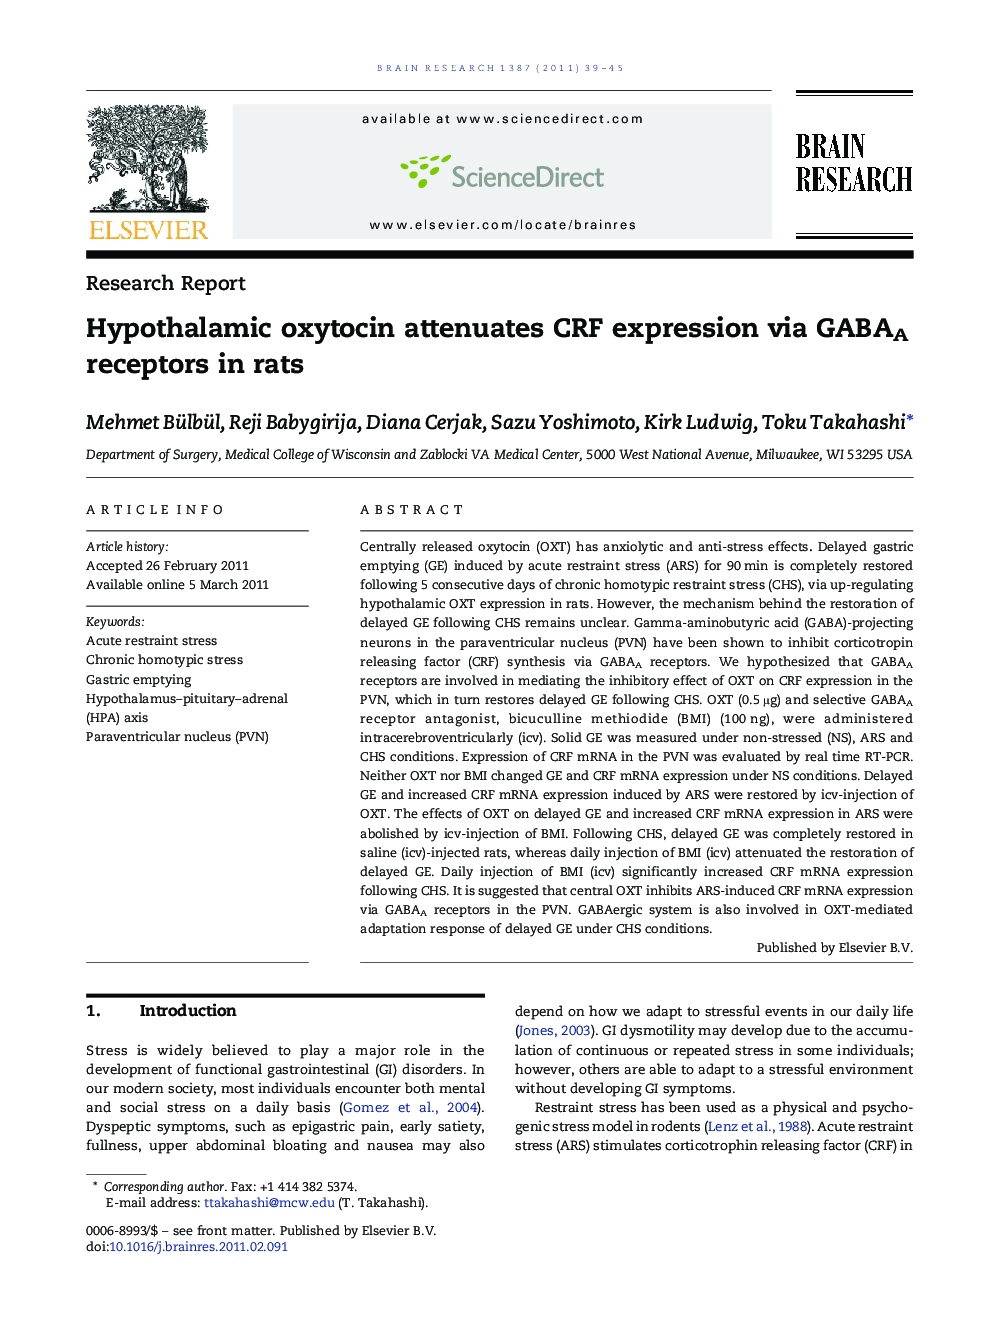 Hypothalamic oxytocin attenuates CRF expression via GABAA receptors in rats